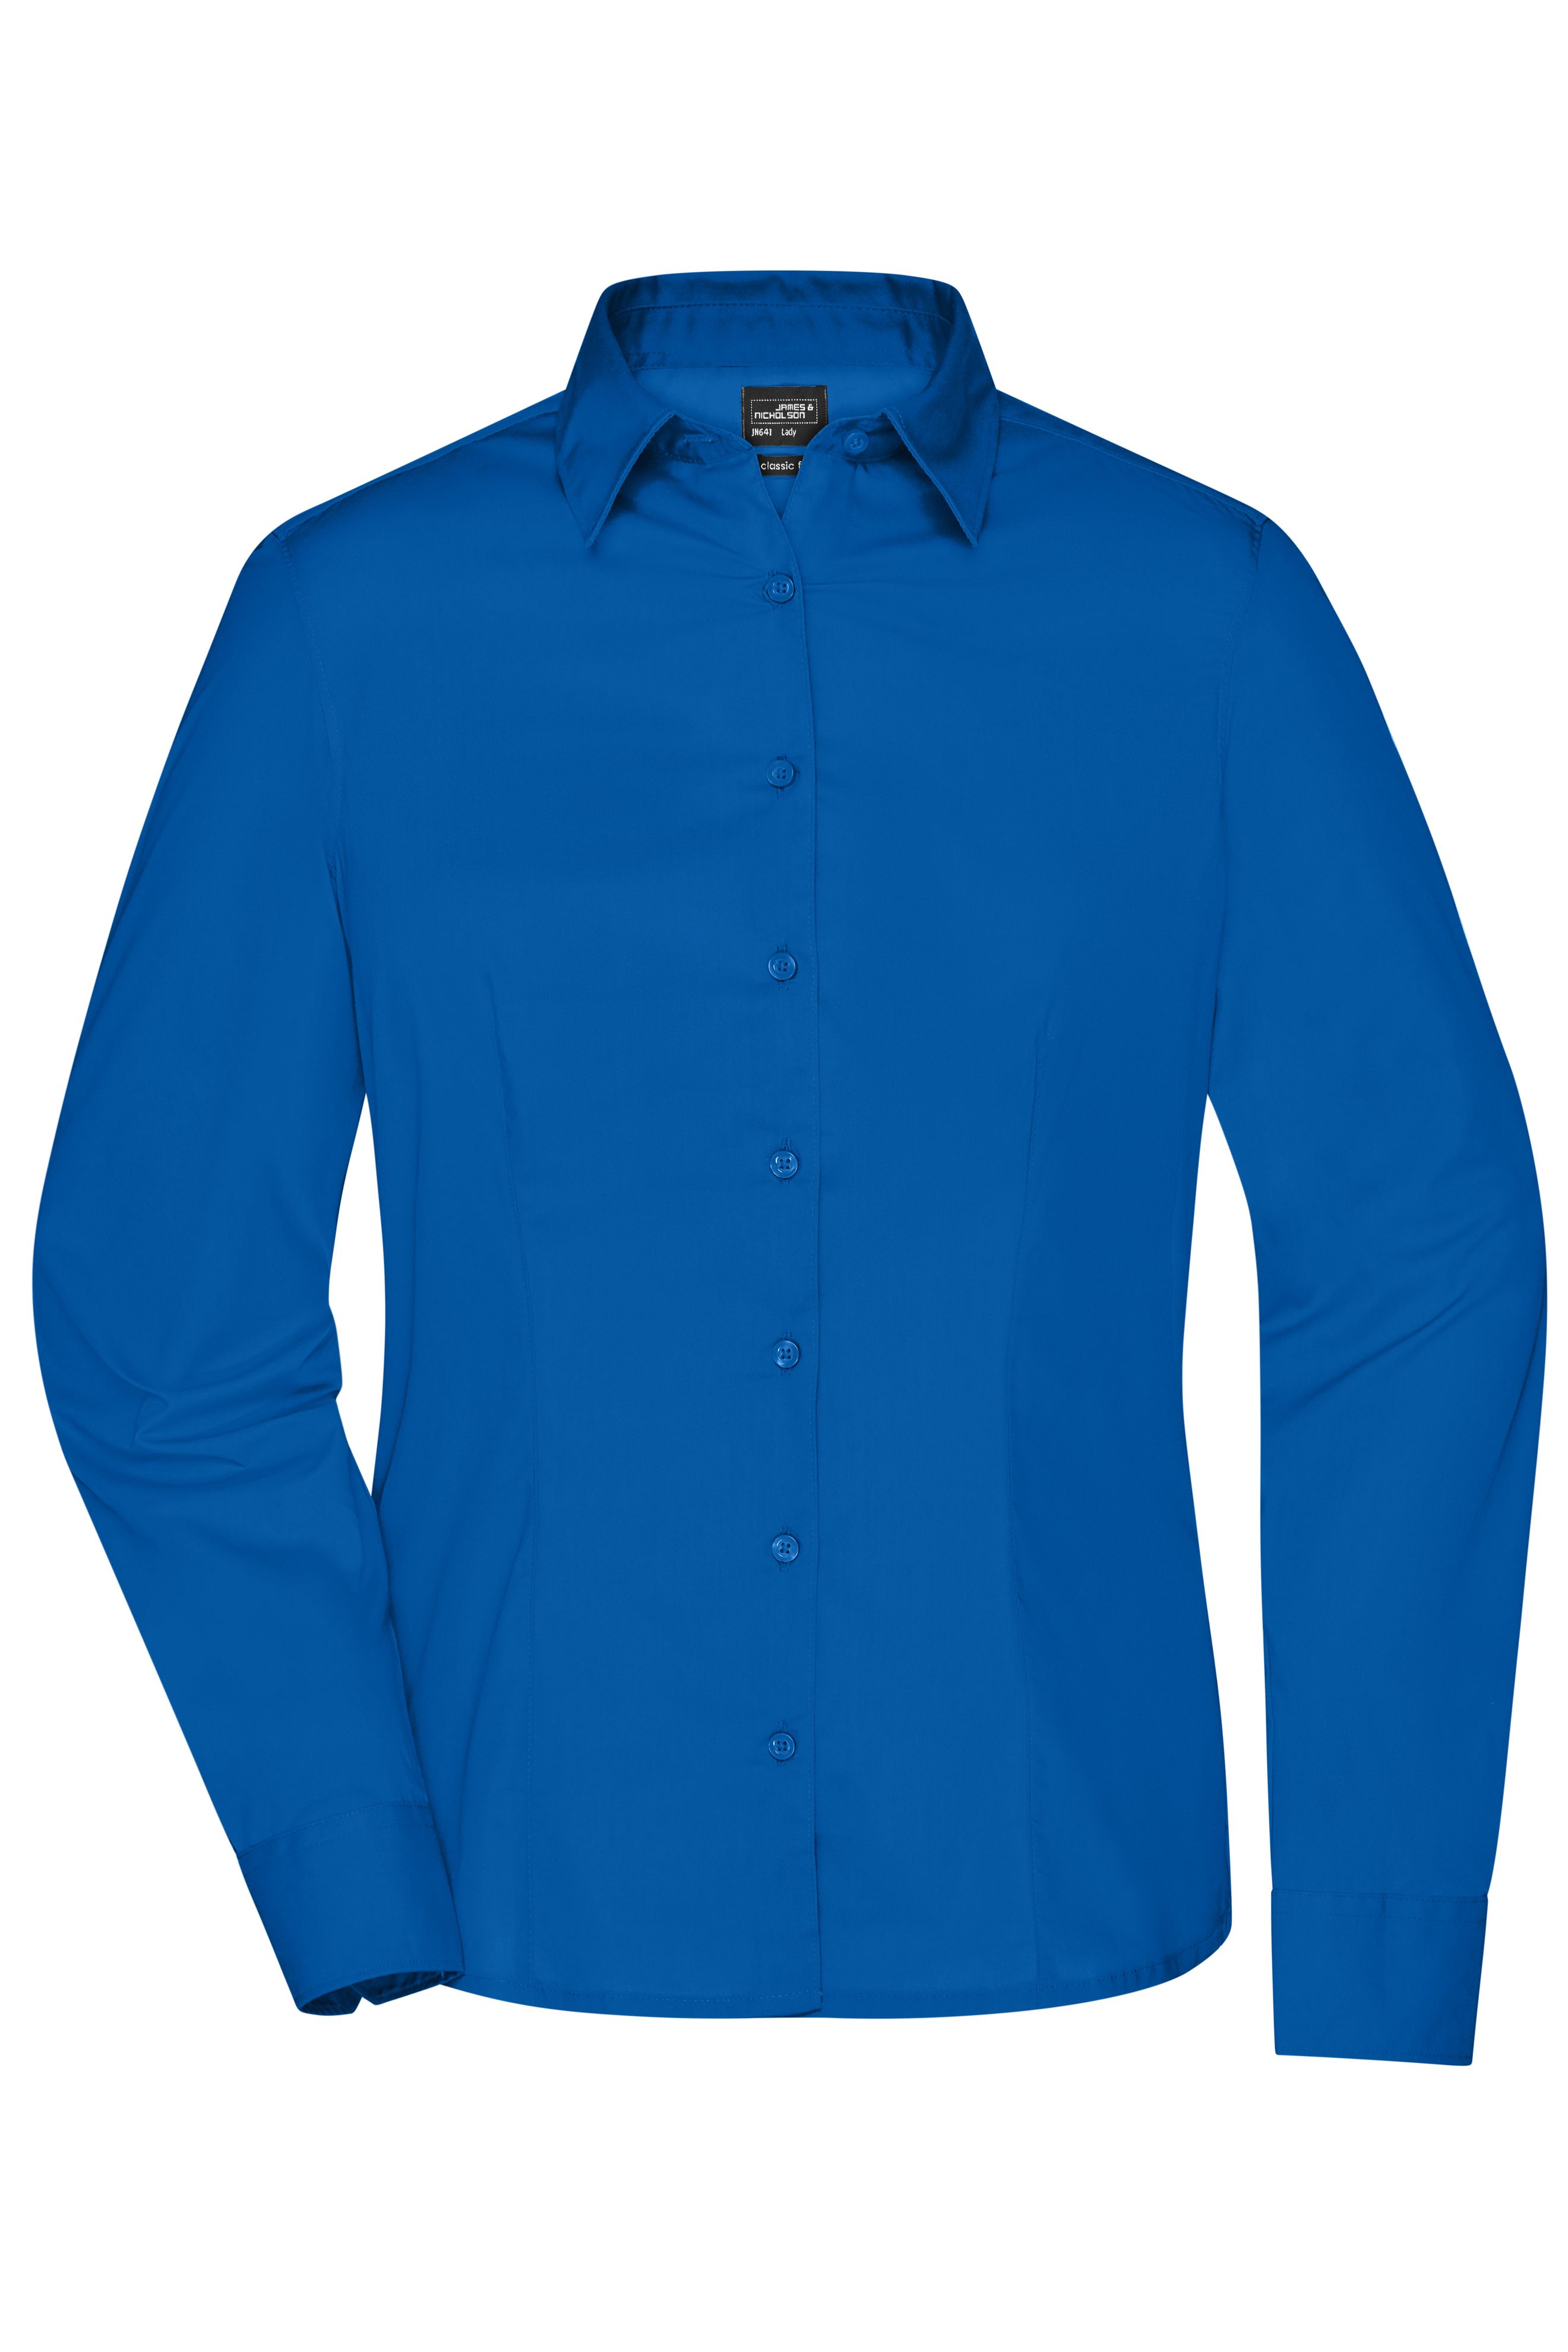 Ladies' Business Shirt Long-Sleeved JN641 Klassisches Shirt aus strapazierfähigem Mischgewebe